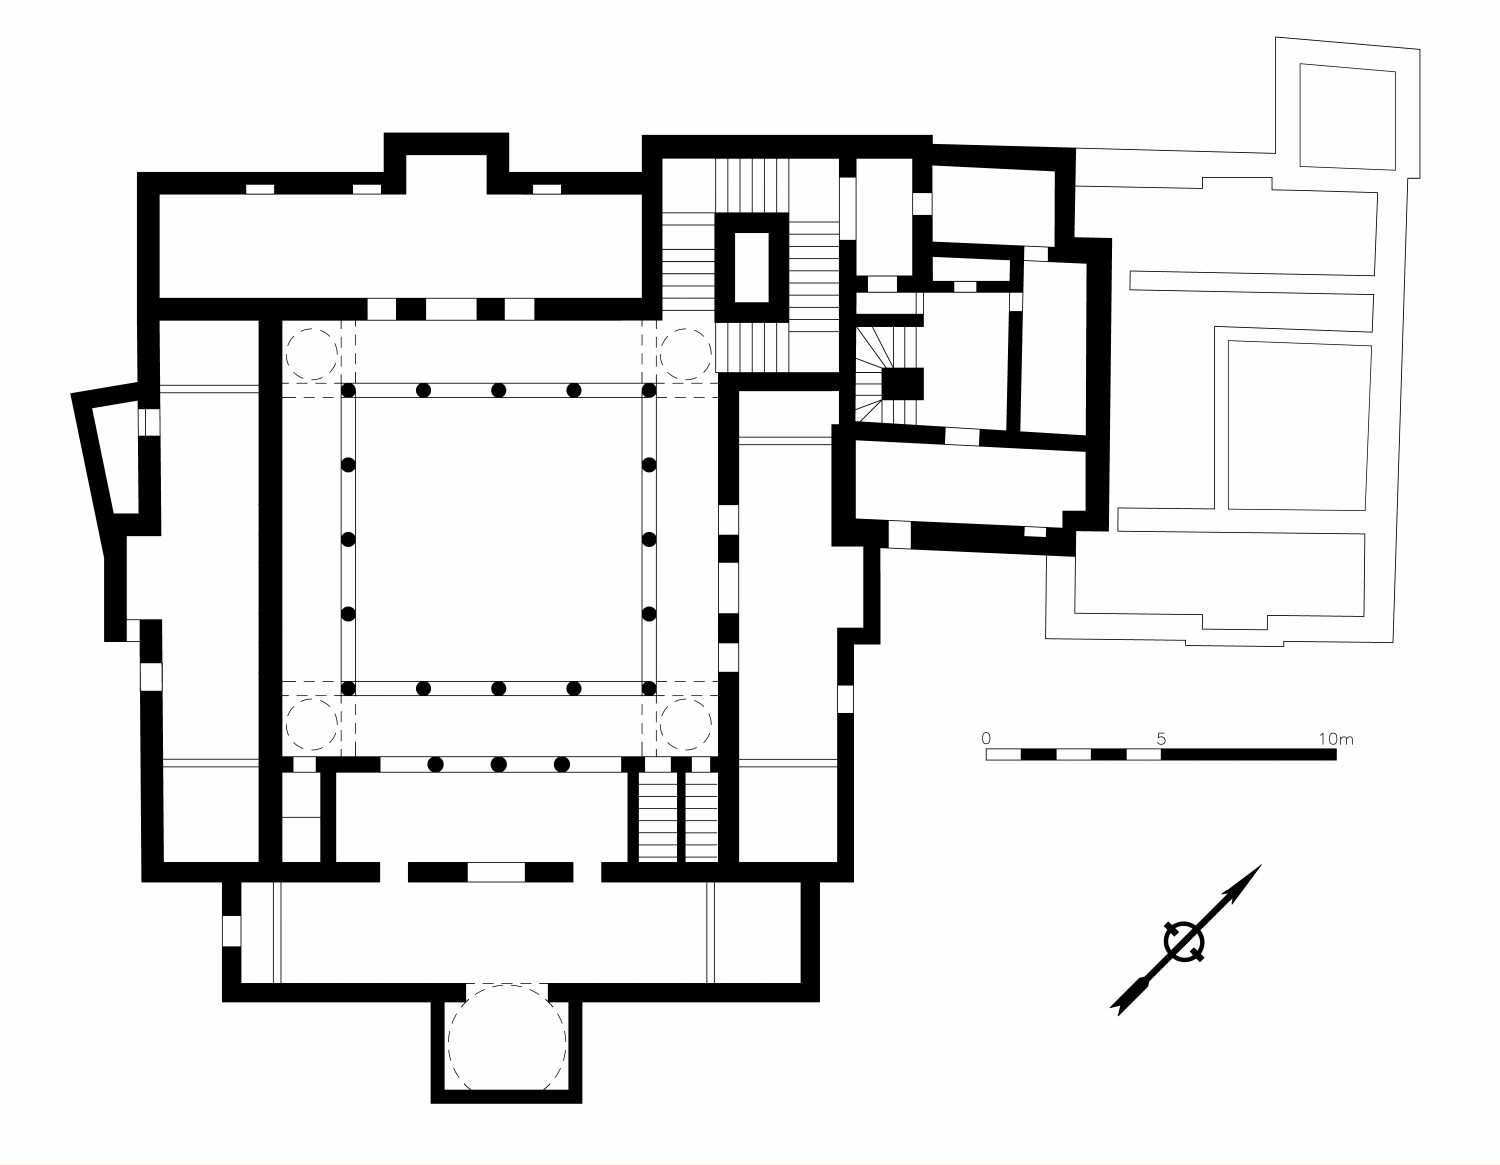 Plan of the second floor, Based on Golvin (1988)